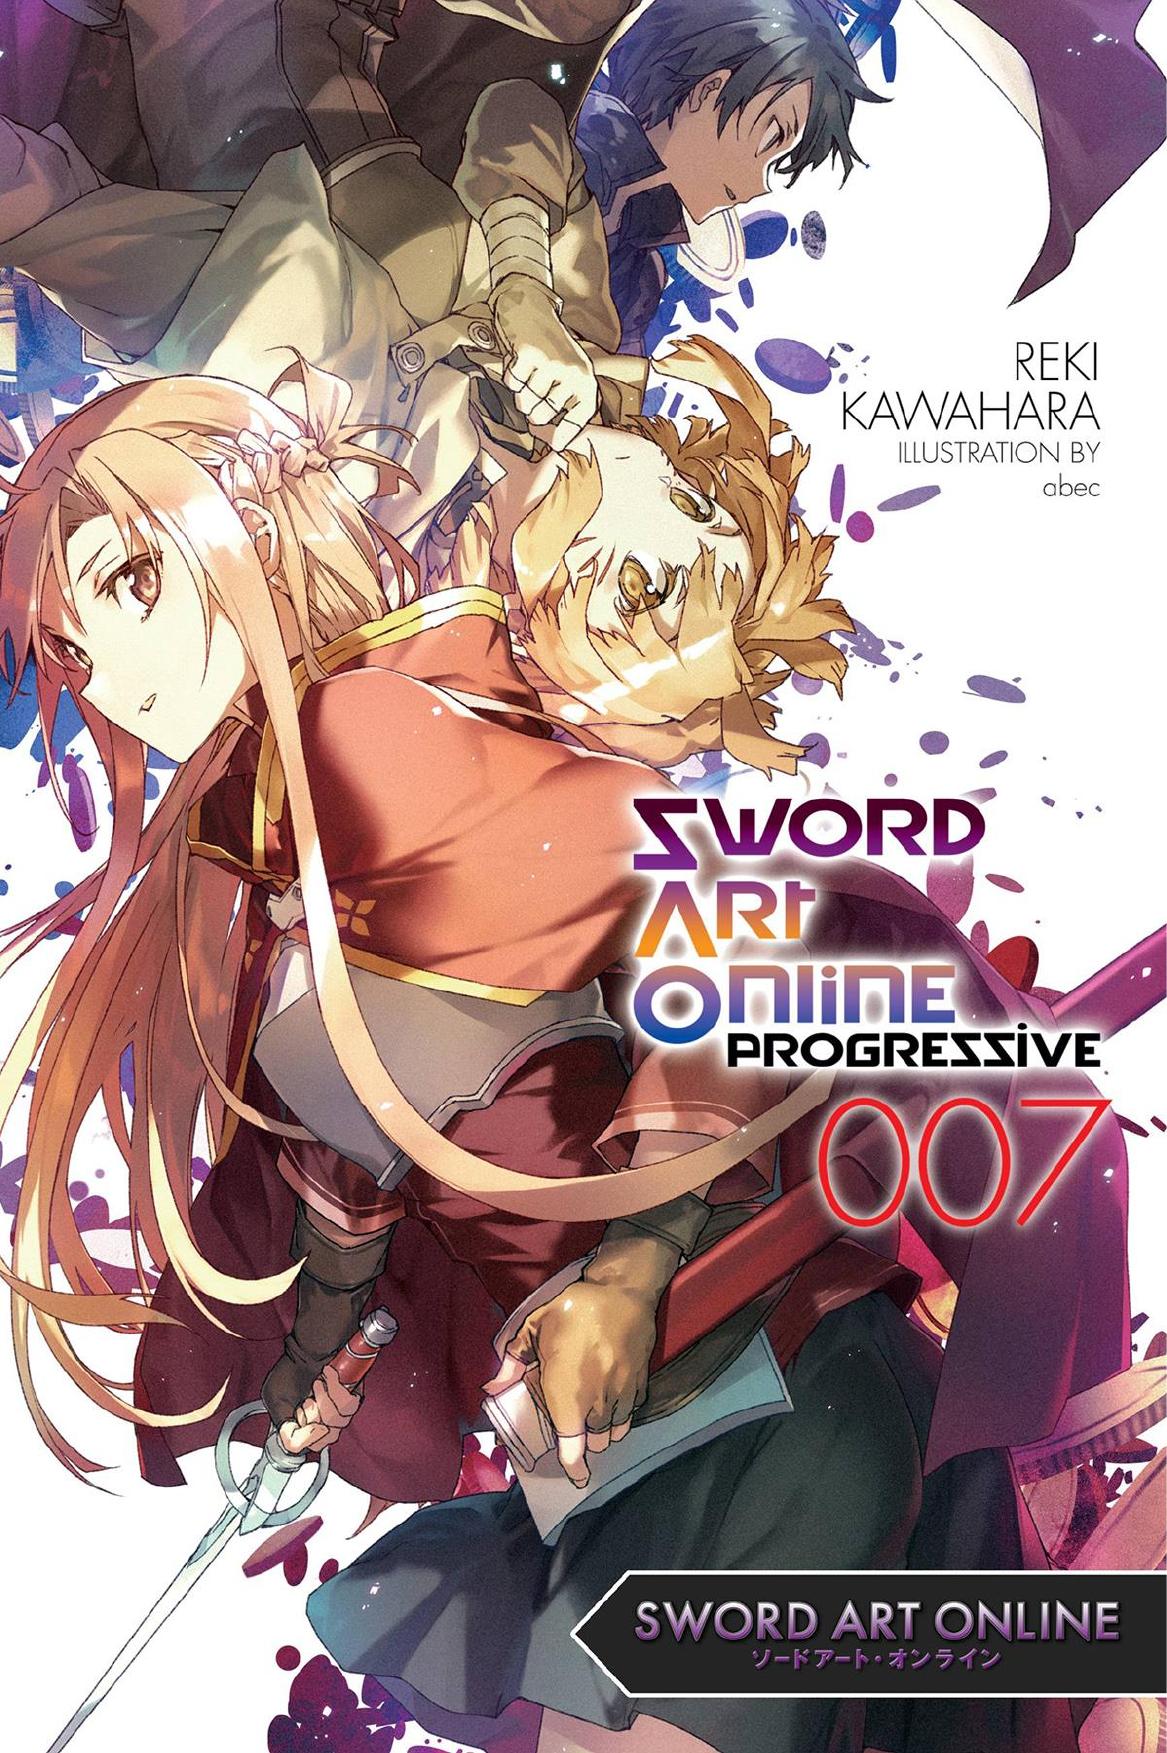 Sword Art Online Progressive 7 by Reki Kawahara & abec